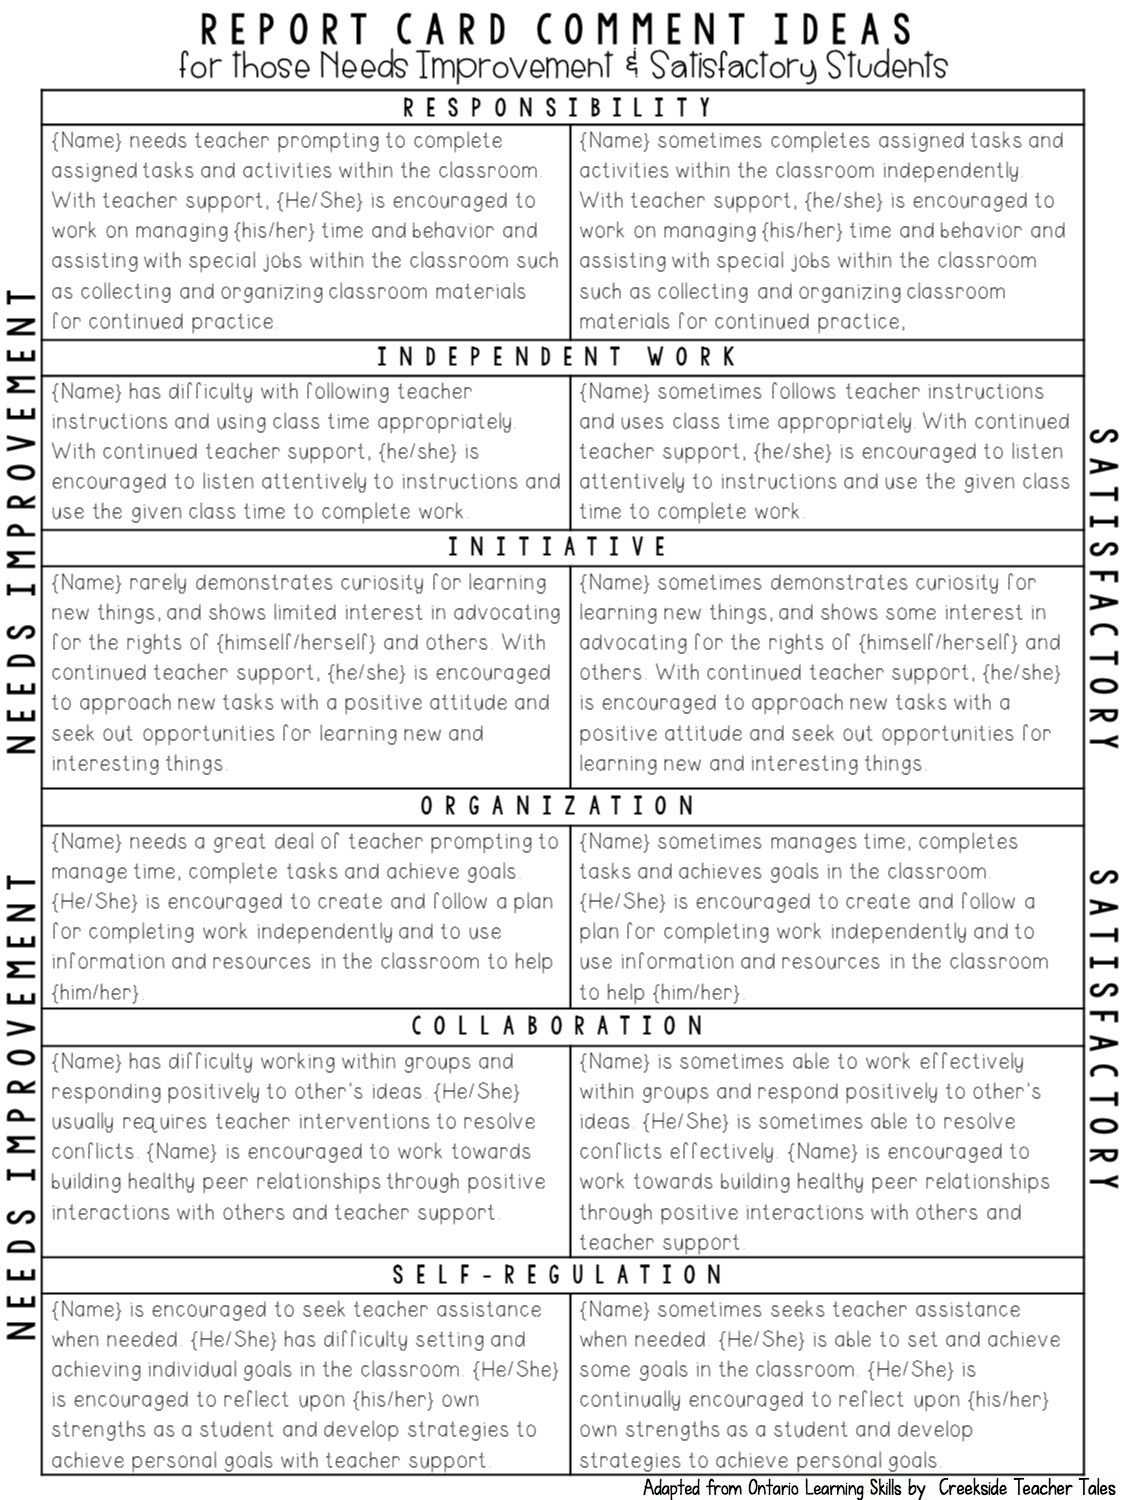 Blank Report Card Template | Activities | Kindergarten Inside Blank Report Card Template